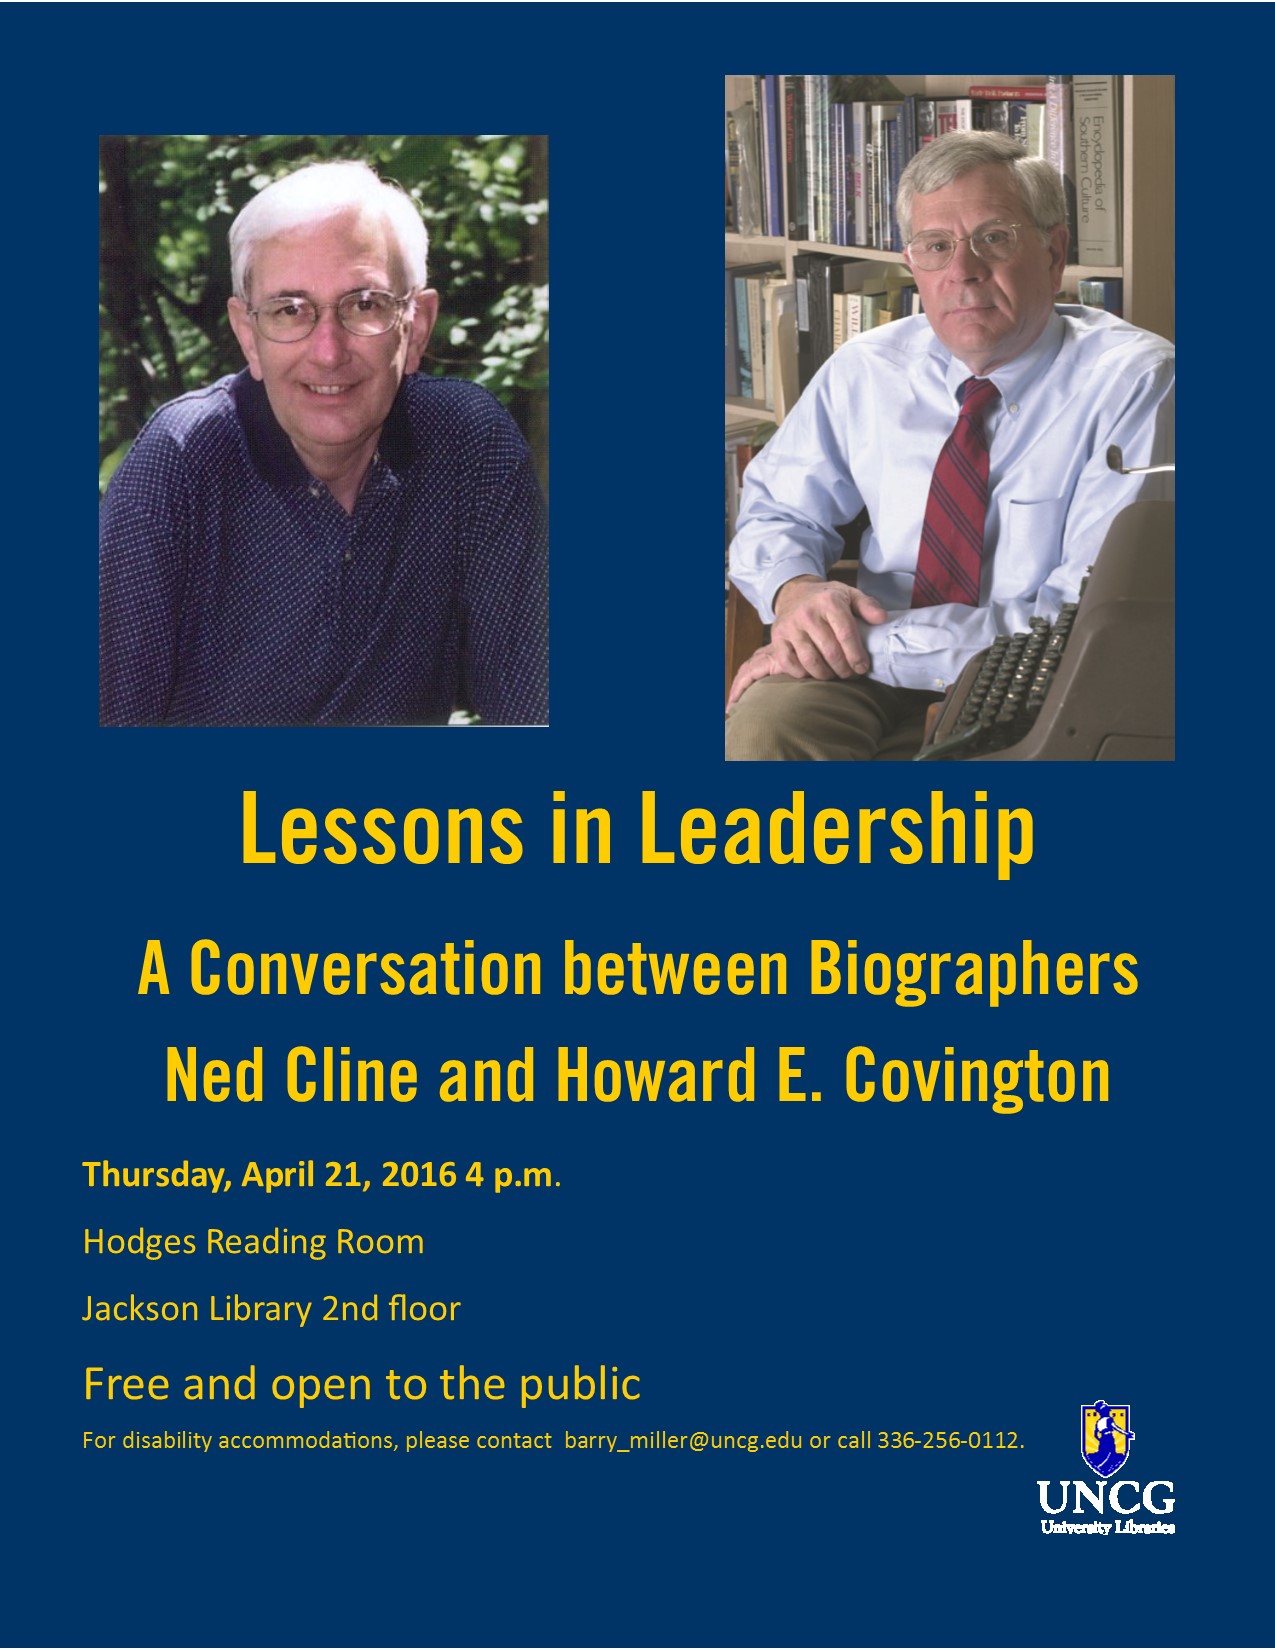 Flyer for Cline & Covington on leadership at Jackson Library, Thursday April 21, 4 p.m.